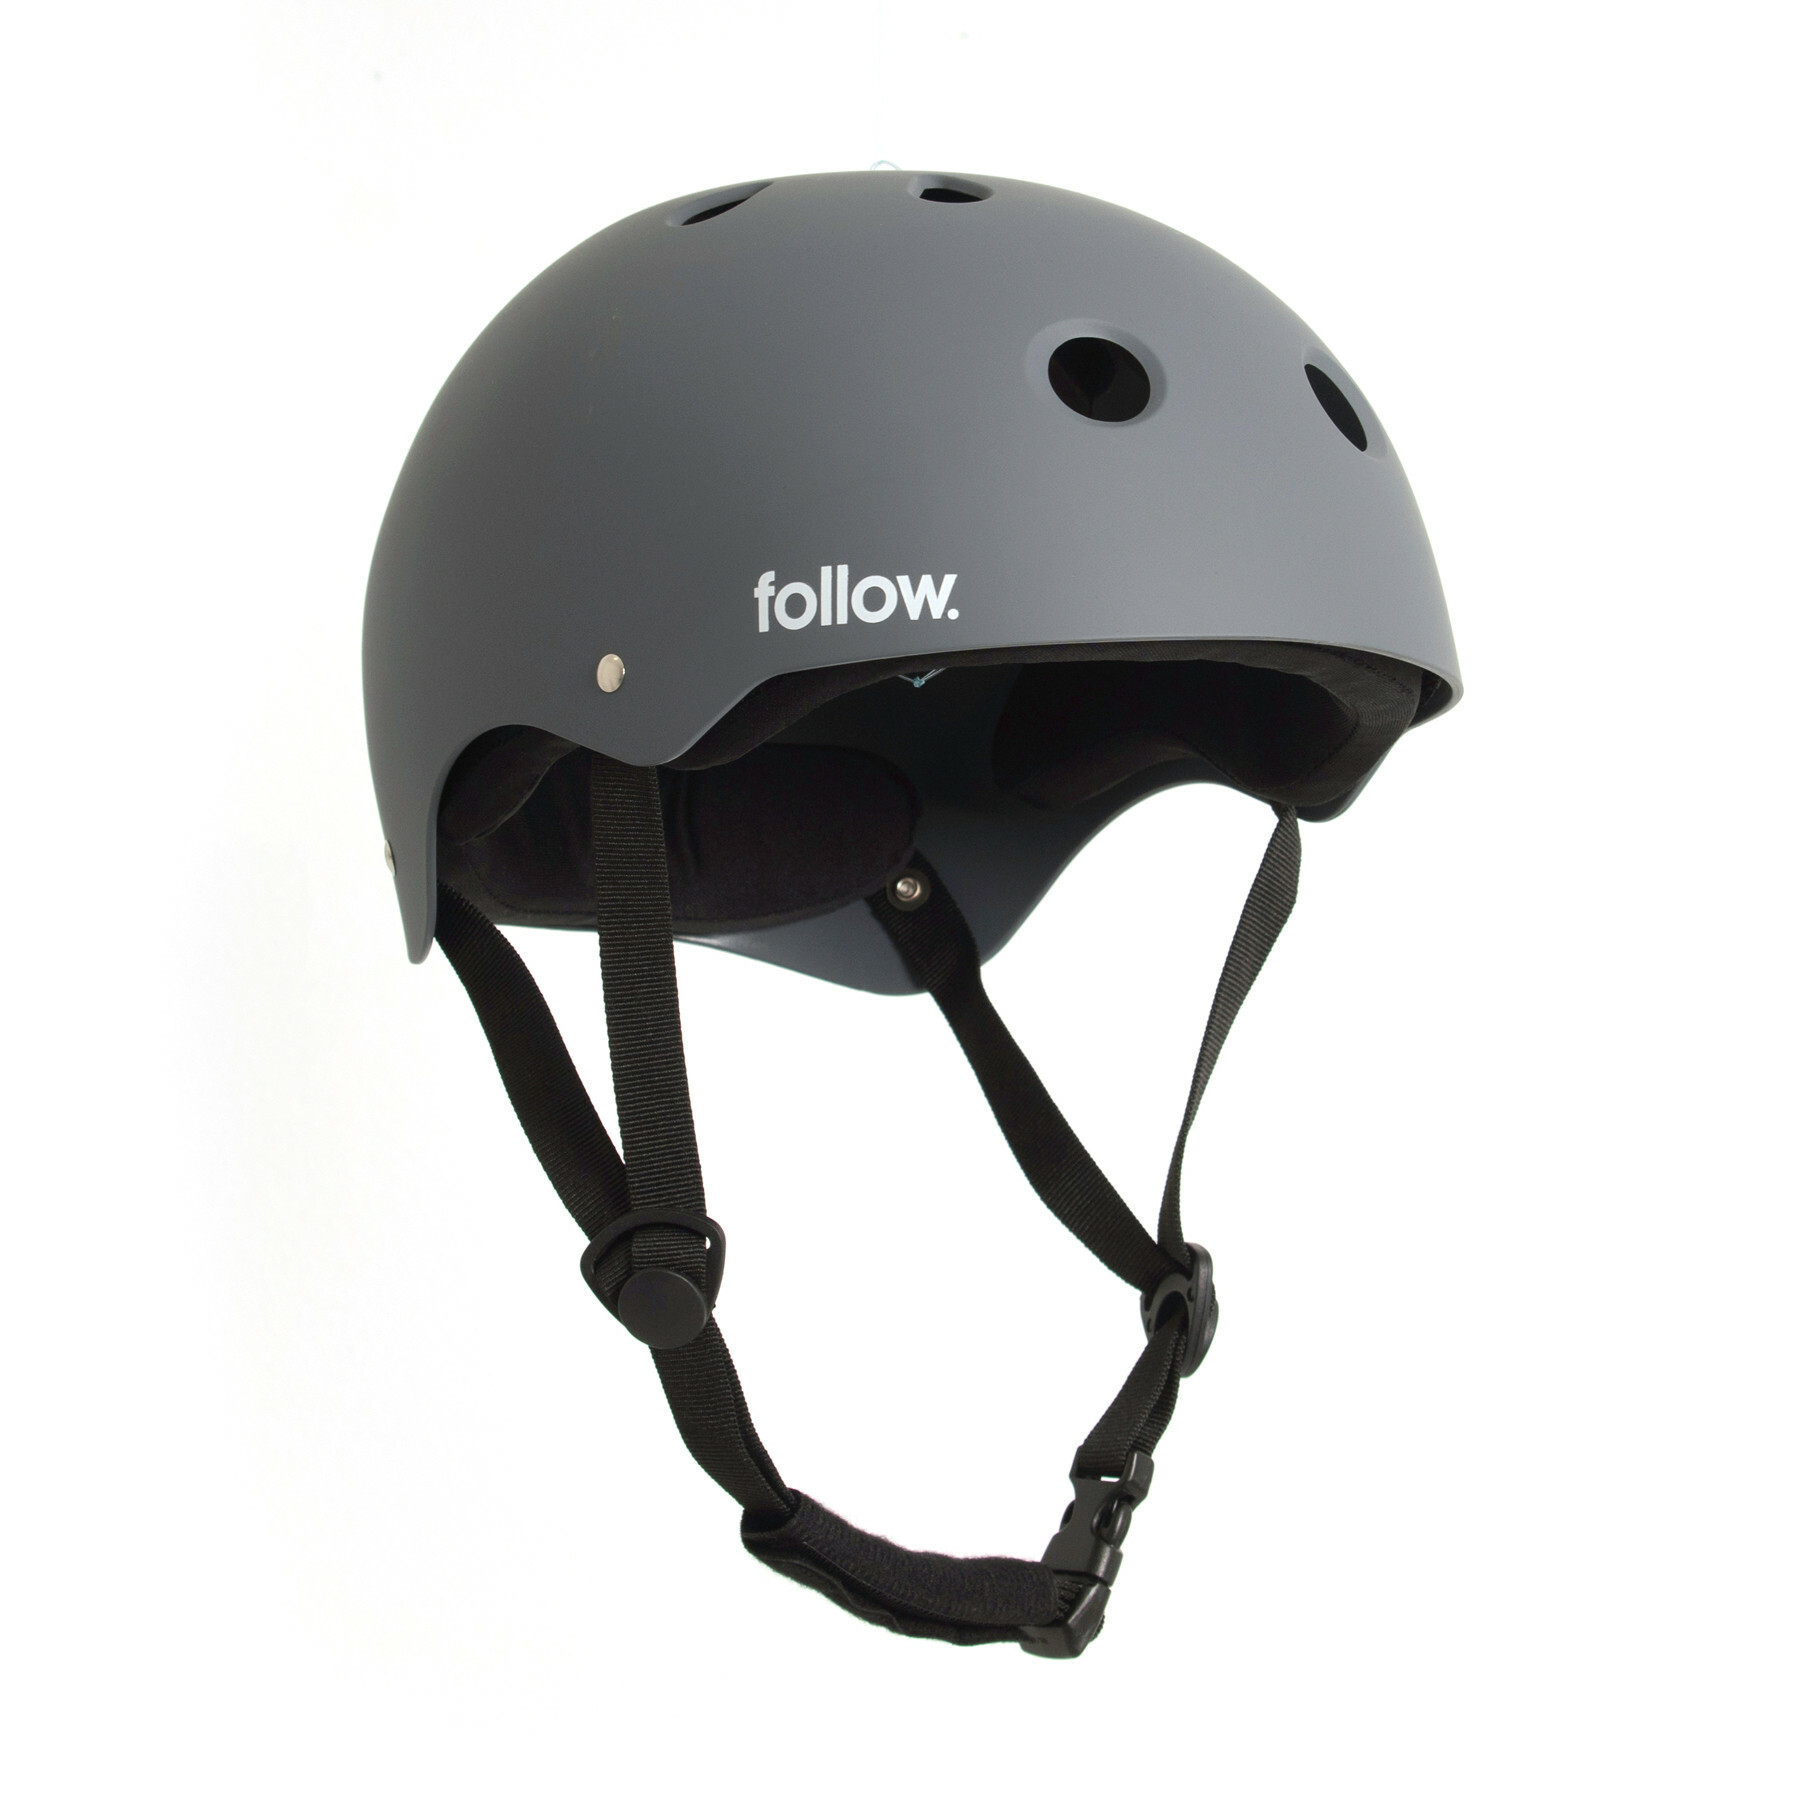 Follow Safety First helmet stone